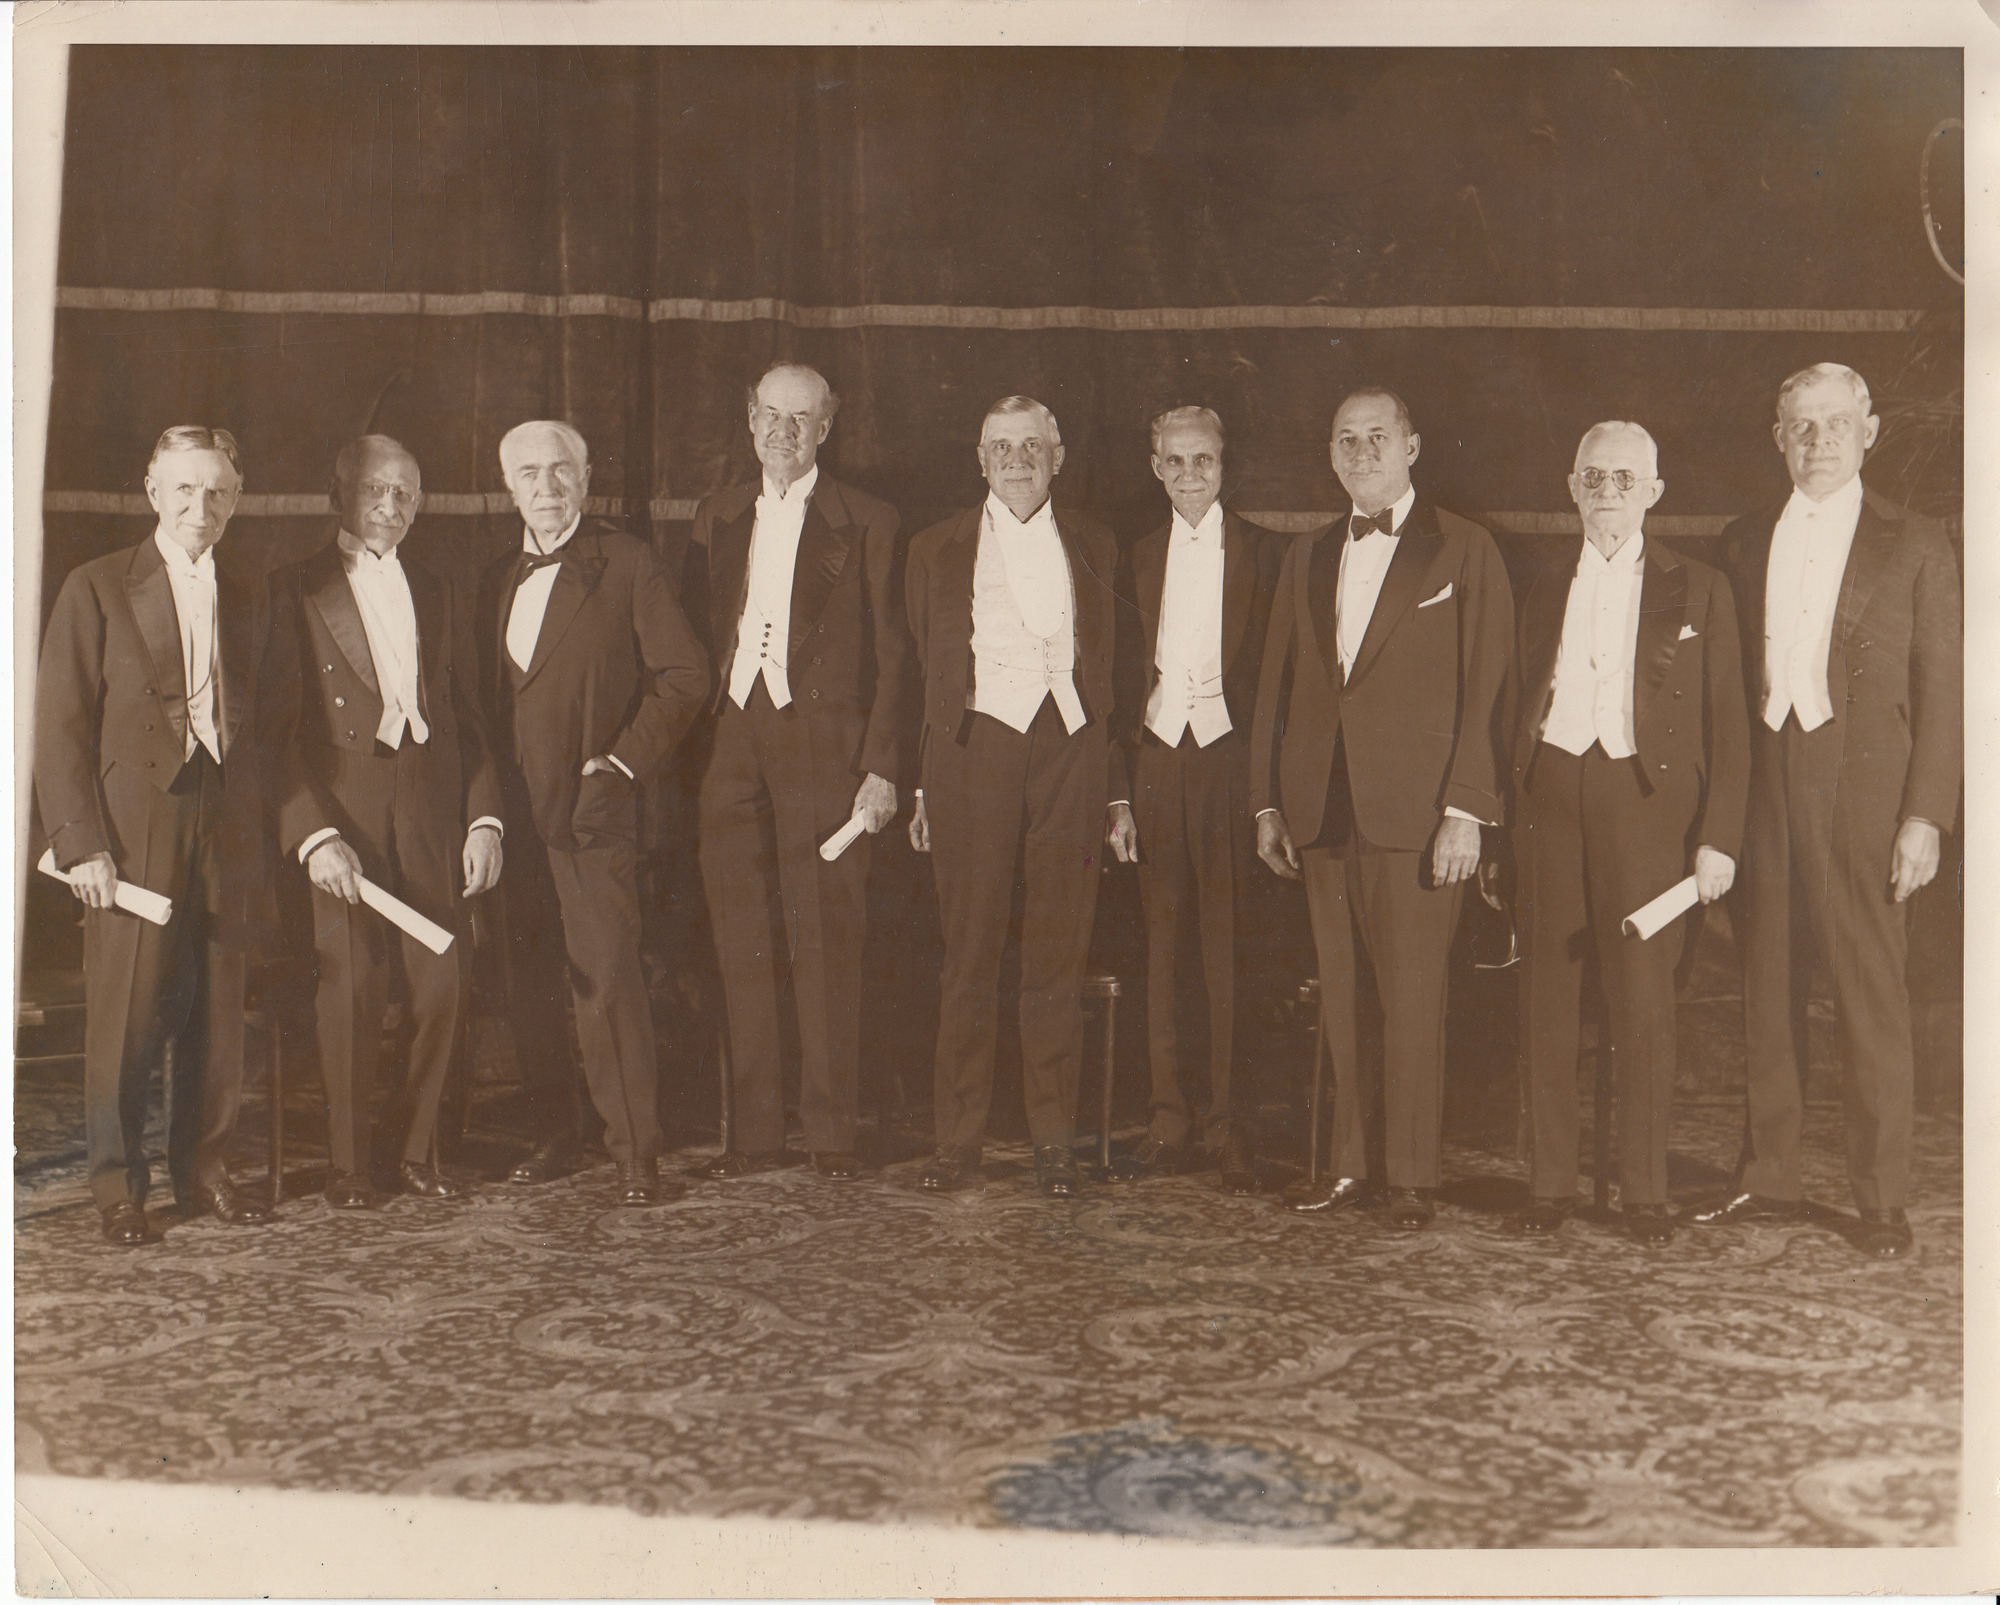 Left to right, Harvey Firestone, Julius Rosenwald, Thomas Edison, Thomas Lipton, Charles M. Schwab, Henry Ford, Walter P. Chrysler, George Eastman, and Thomas Wilson.